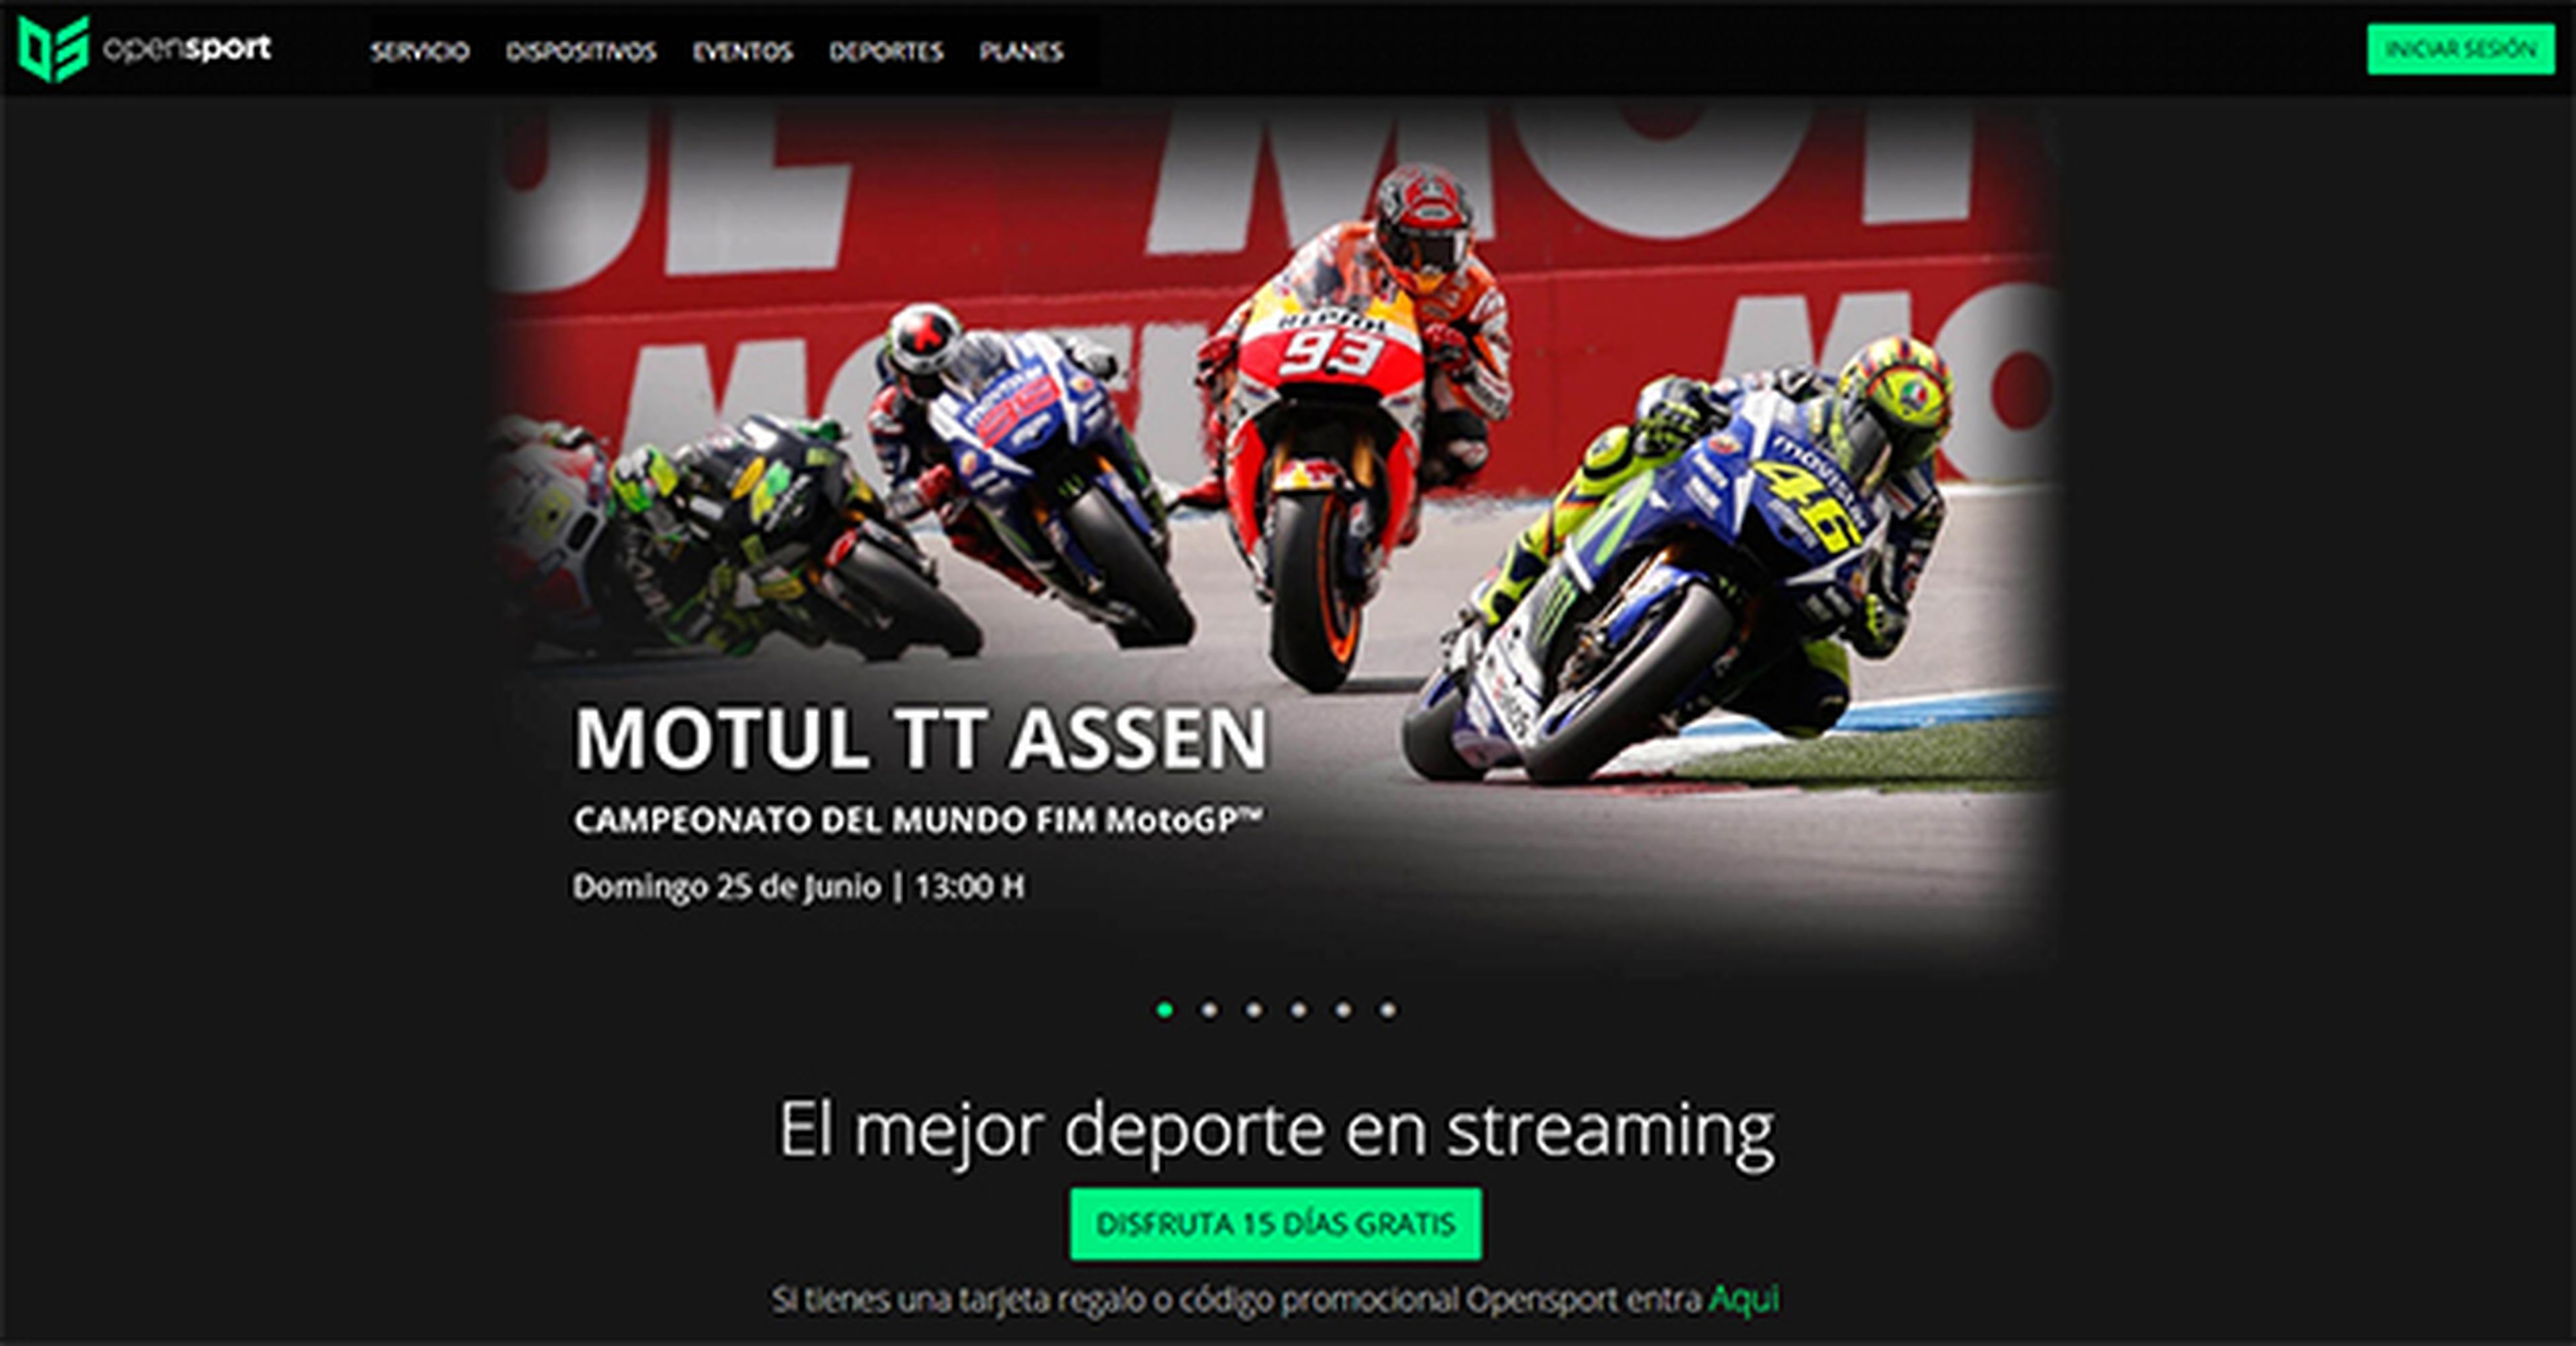 Ver MotoGP Francia Assen gratis por Internet